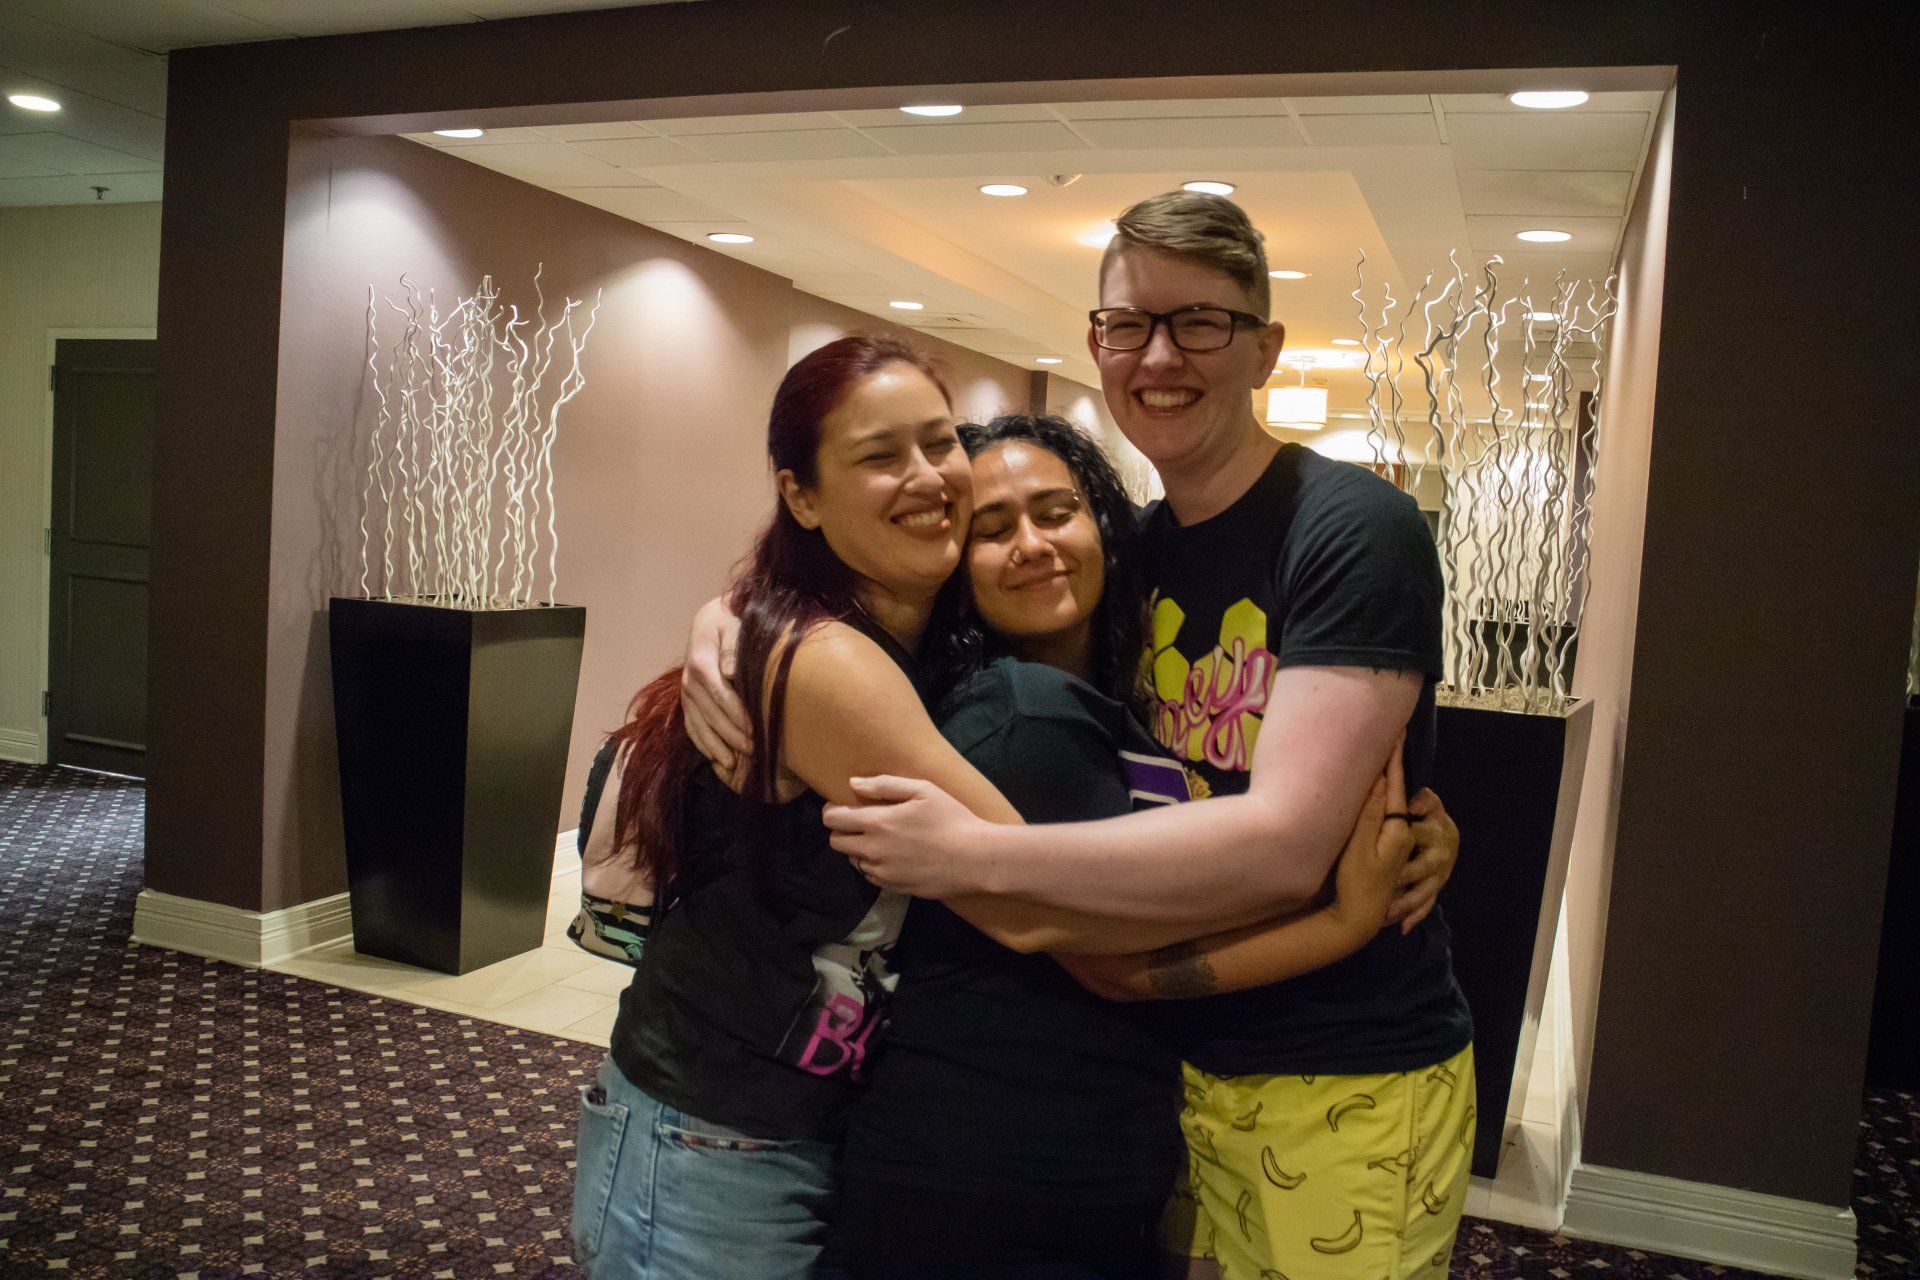 Three people posing together in a big hug